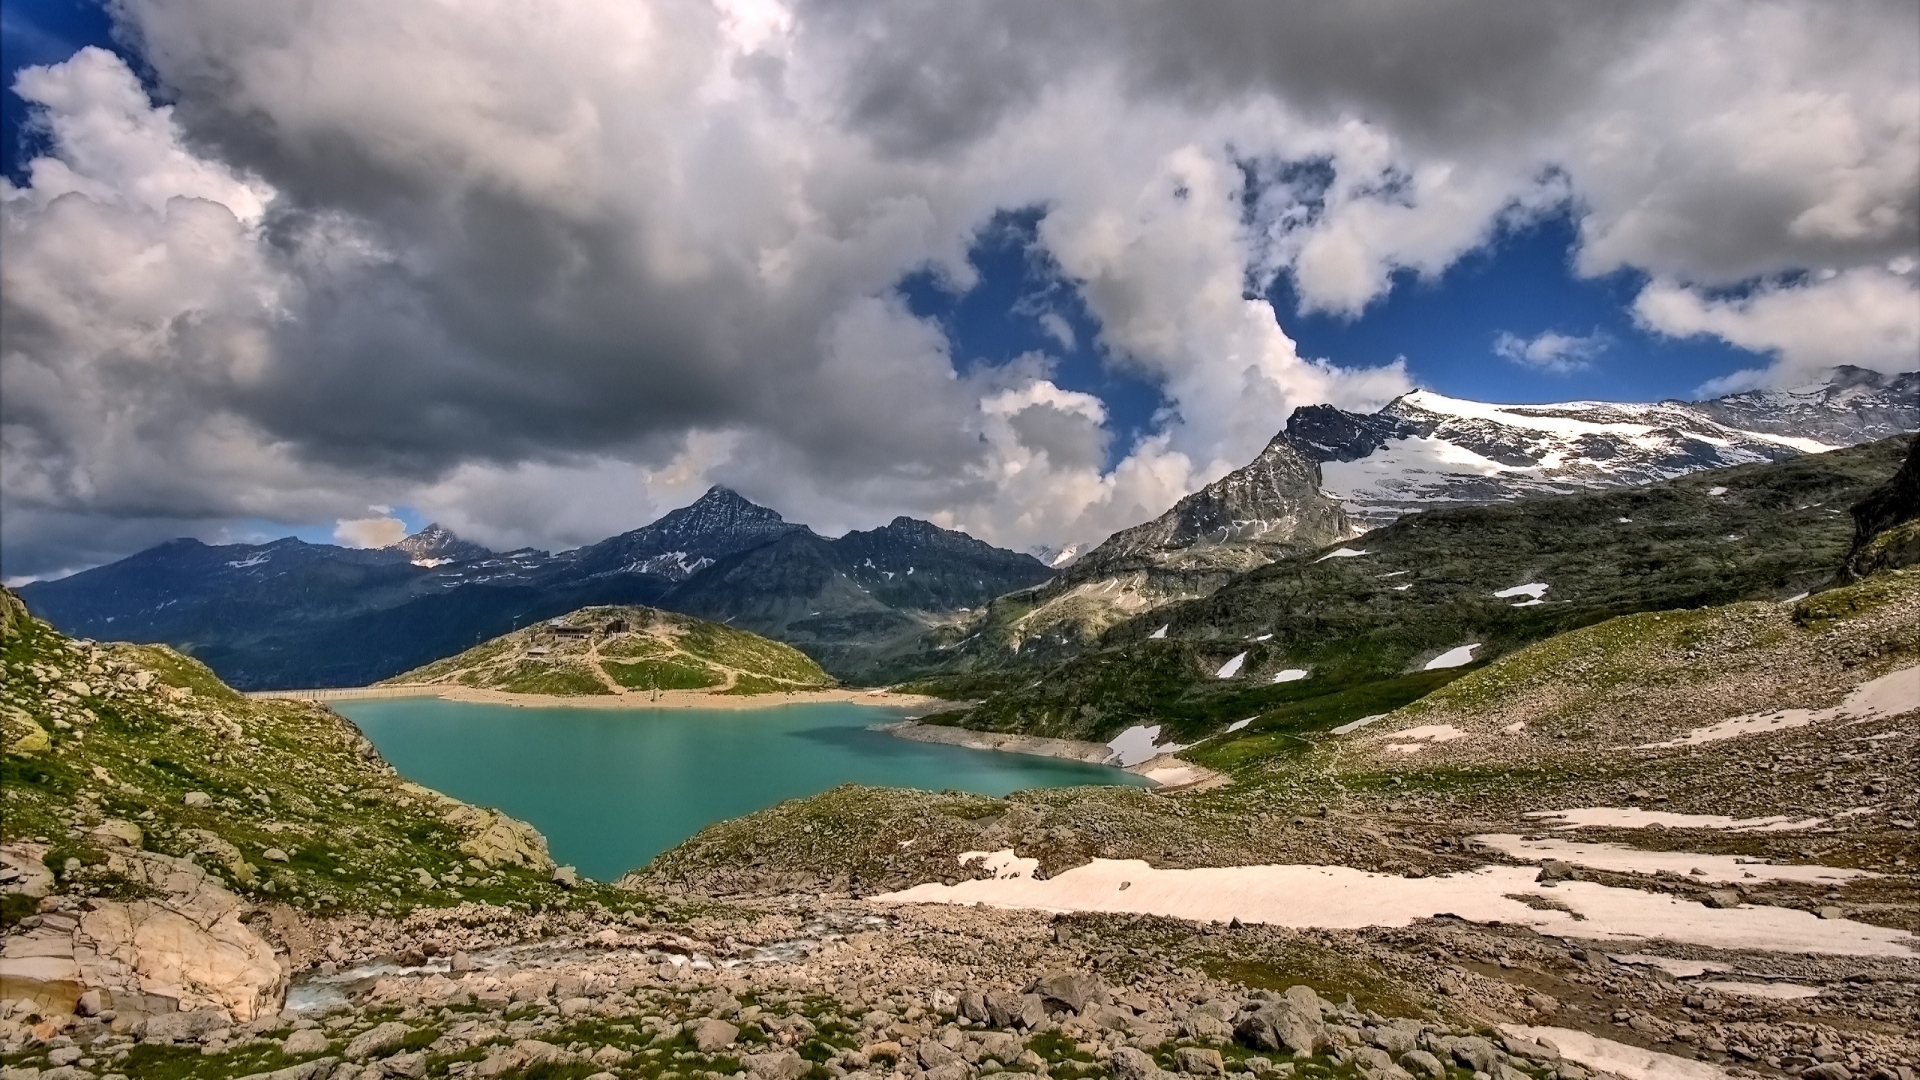 High Alpine Landscape for 1920 x 1080 HDTV 1080p resolution